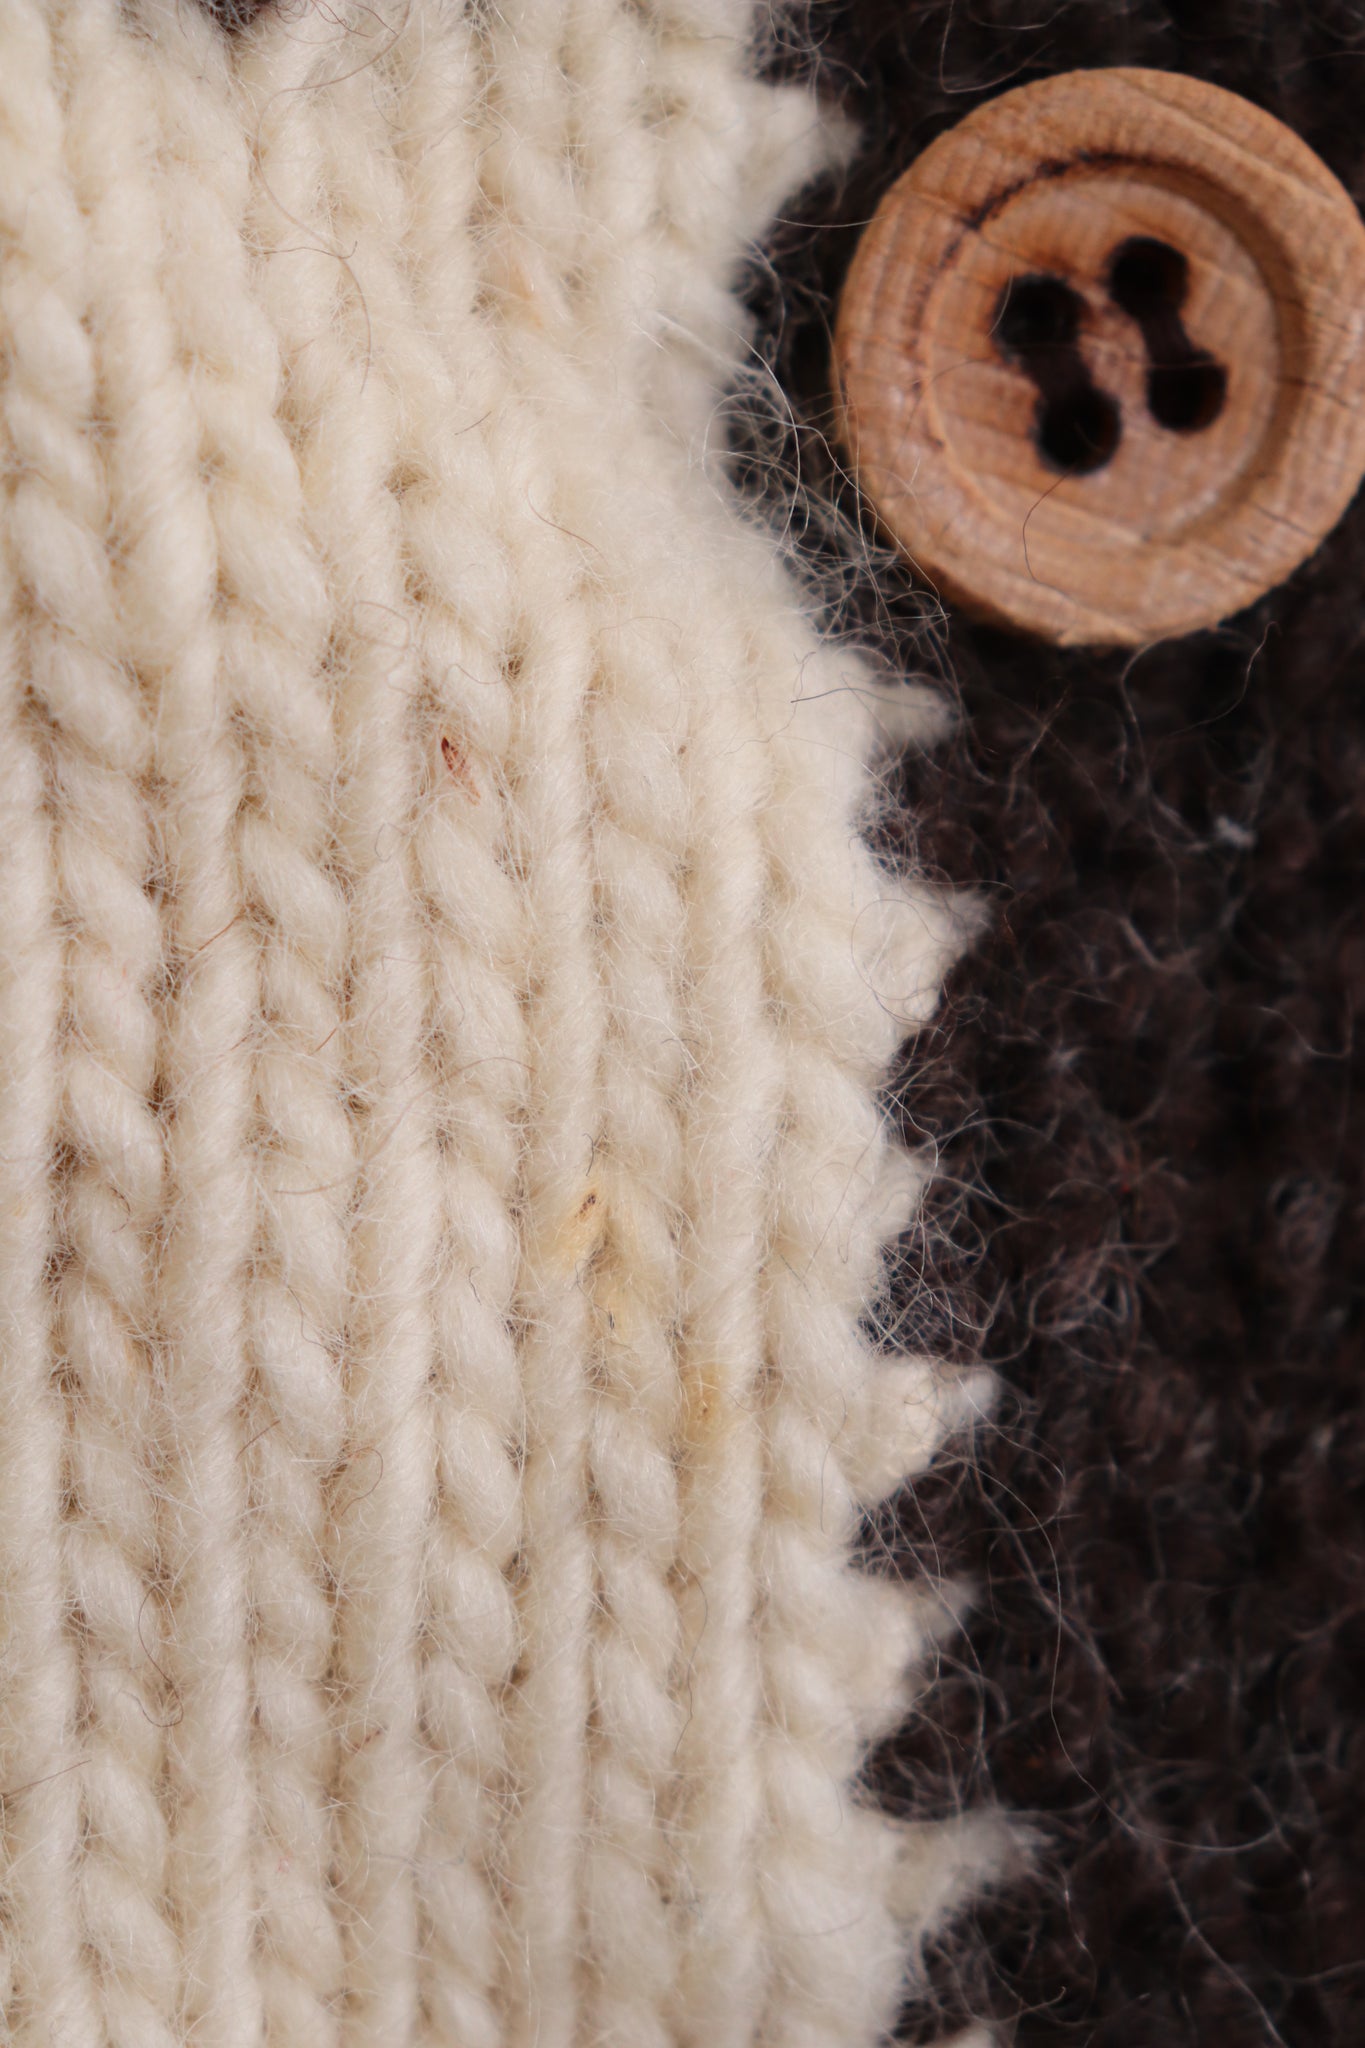 70s Hand-Knit Nordic Pattern Chunky Wool Cardigan